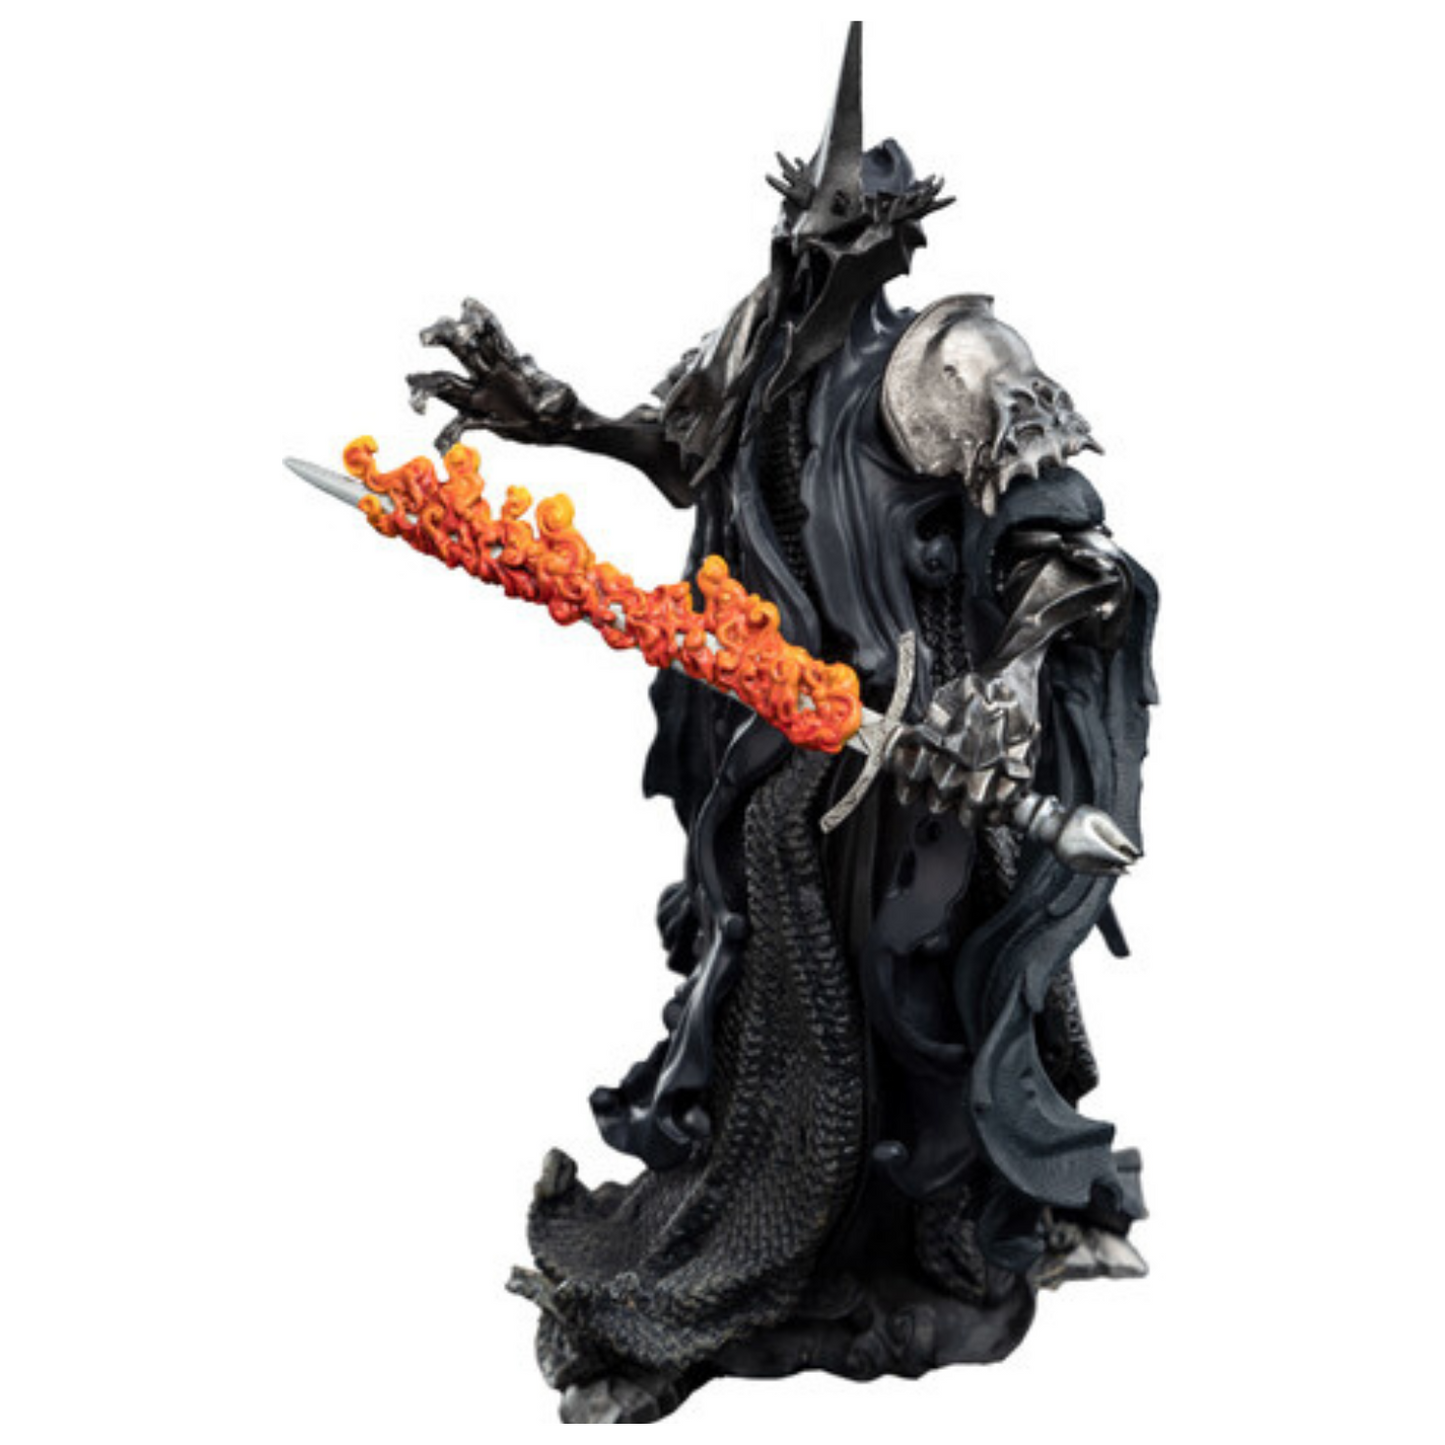 WETA39099 - Mauro Santini - The Witch-king with Fire Sword - Mini Epics - LOTR Trilogy